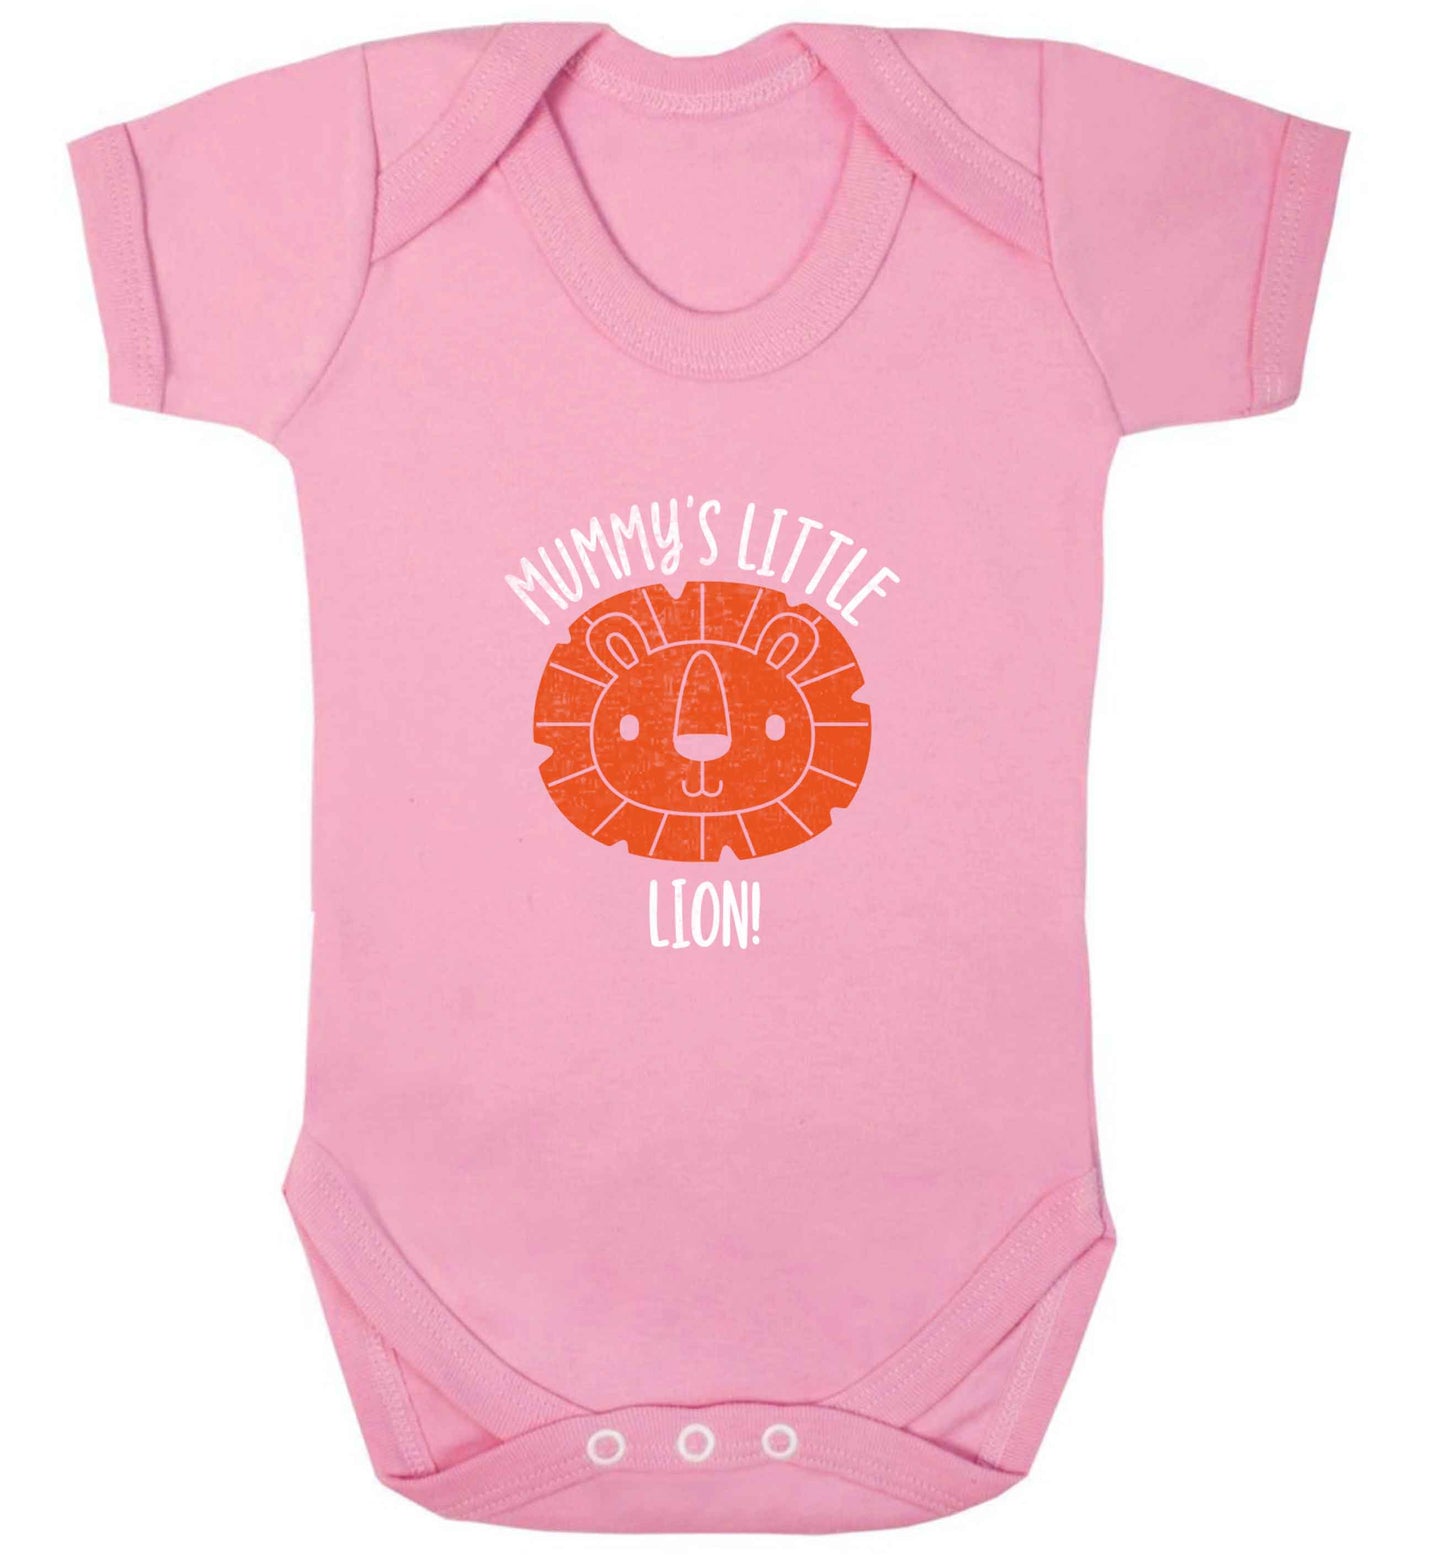 Mummy's little lion baby vest pale pink 18-24 months